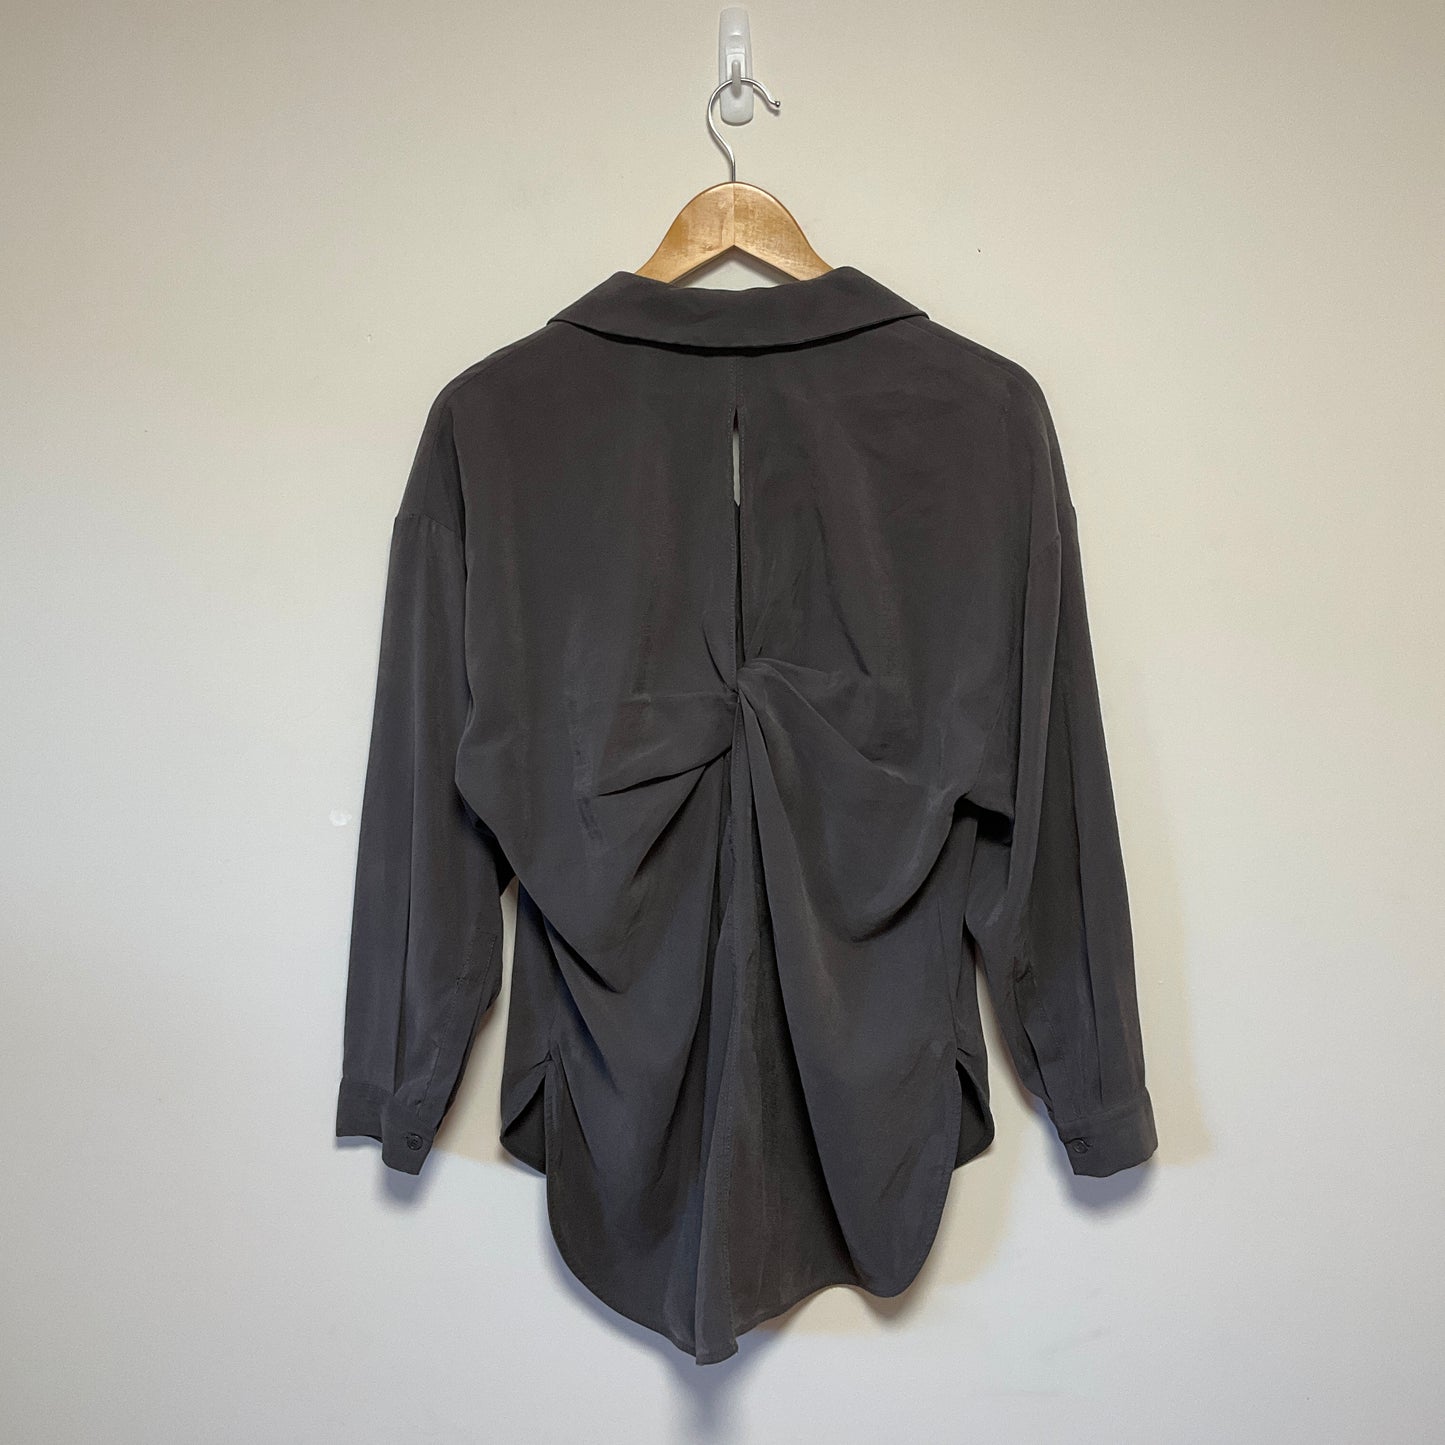 Zara - Long Sleeve Grey Top